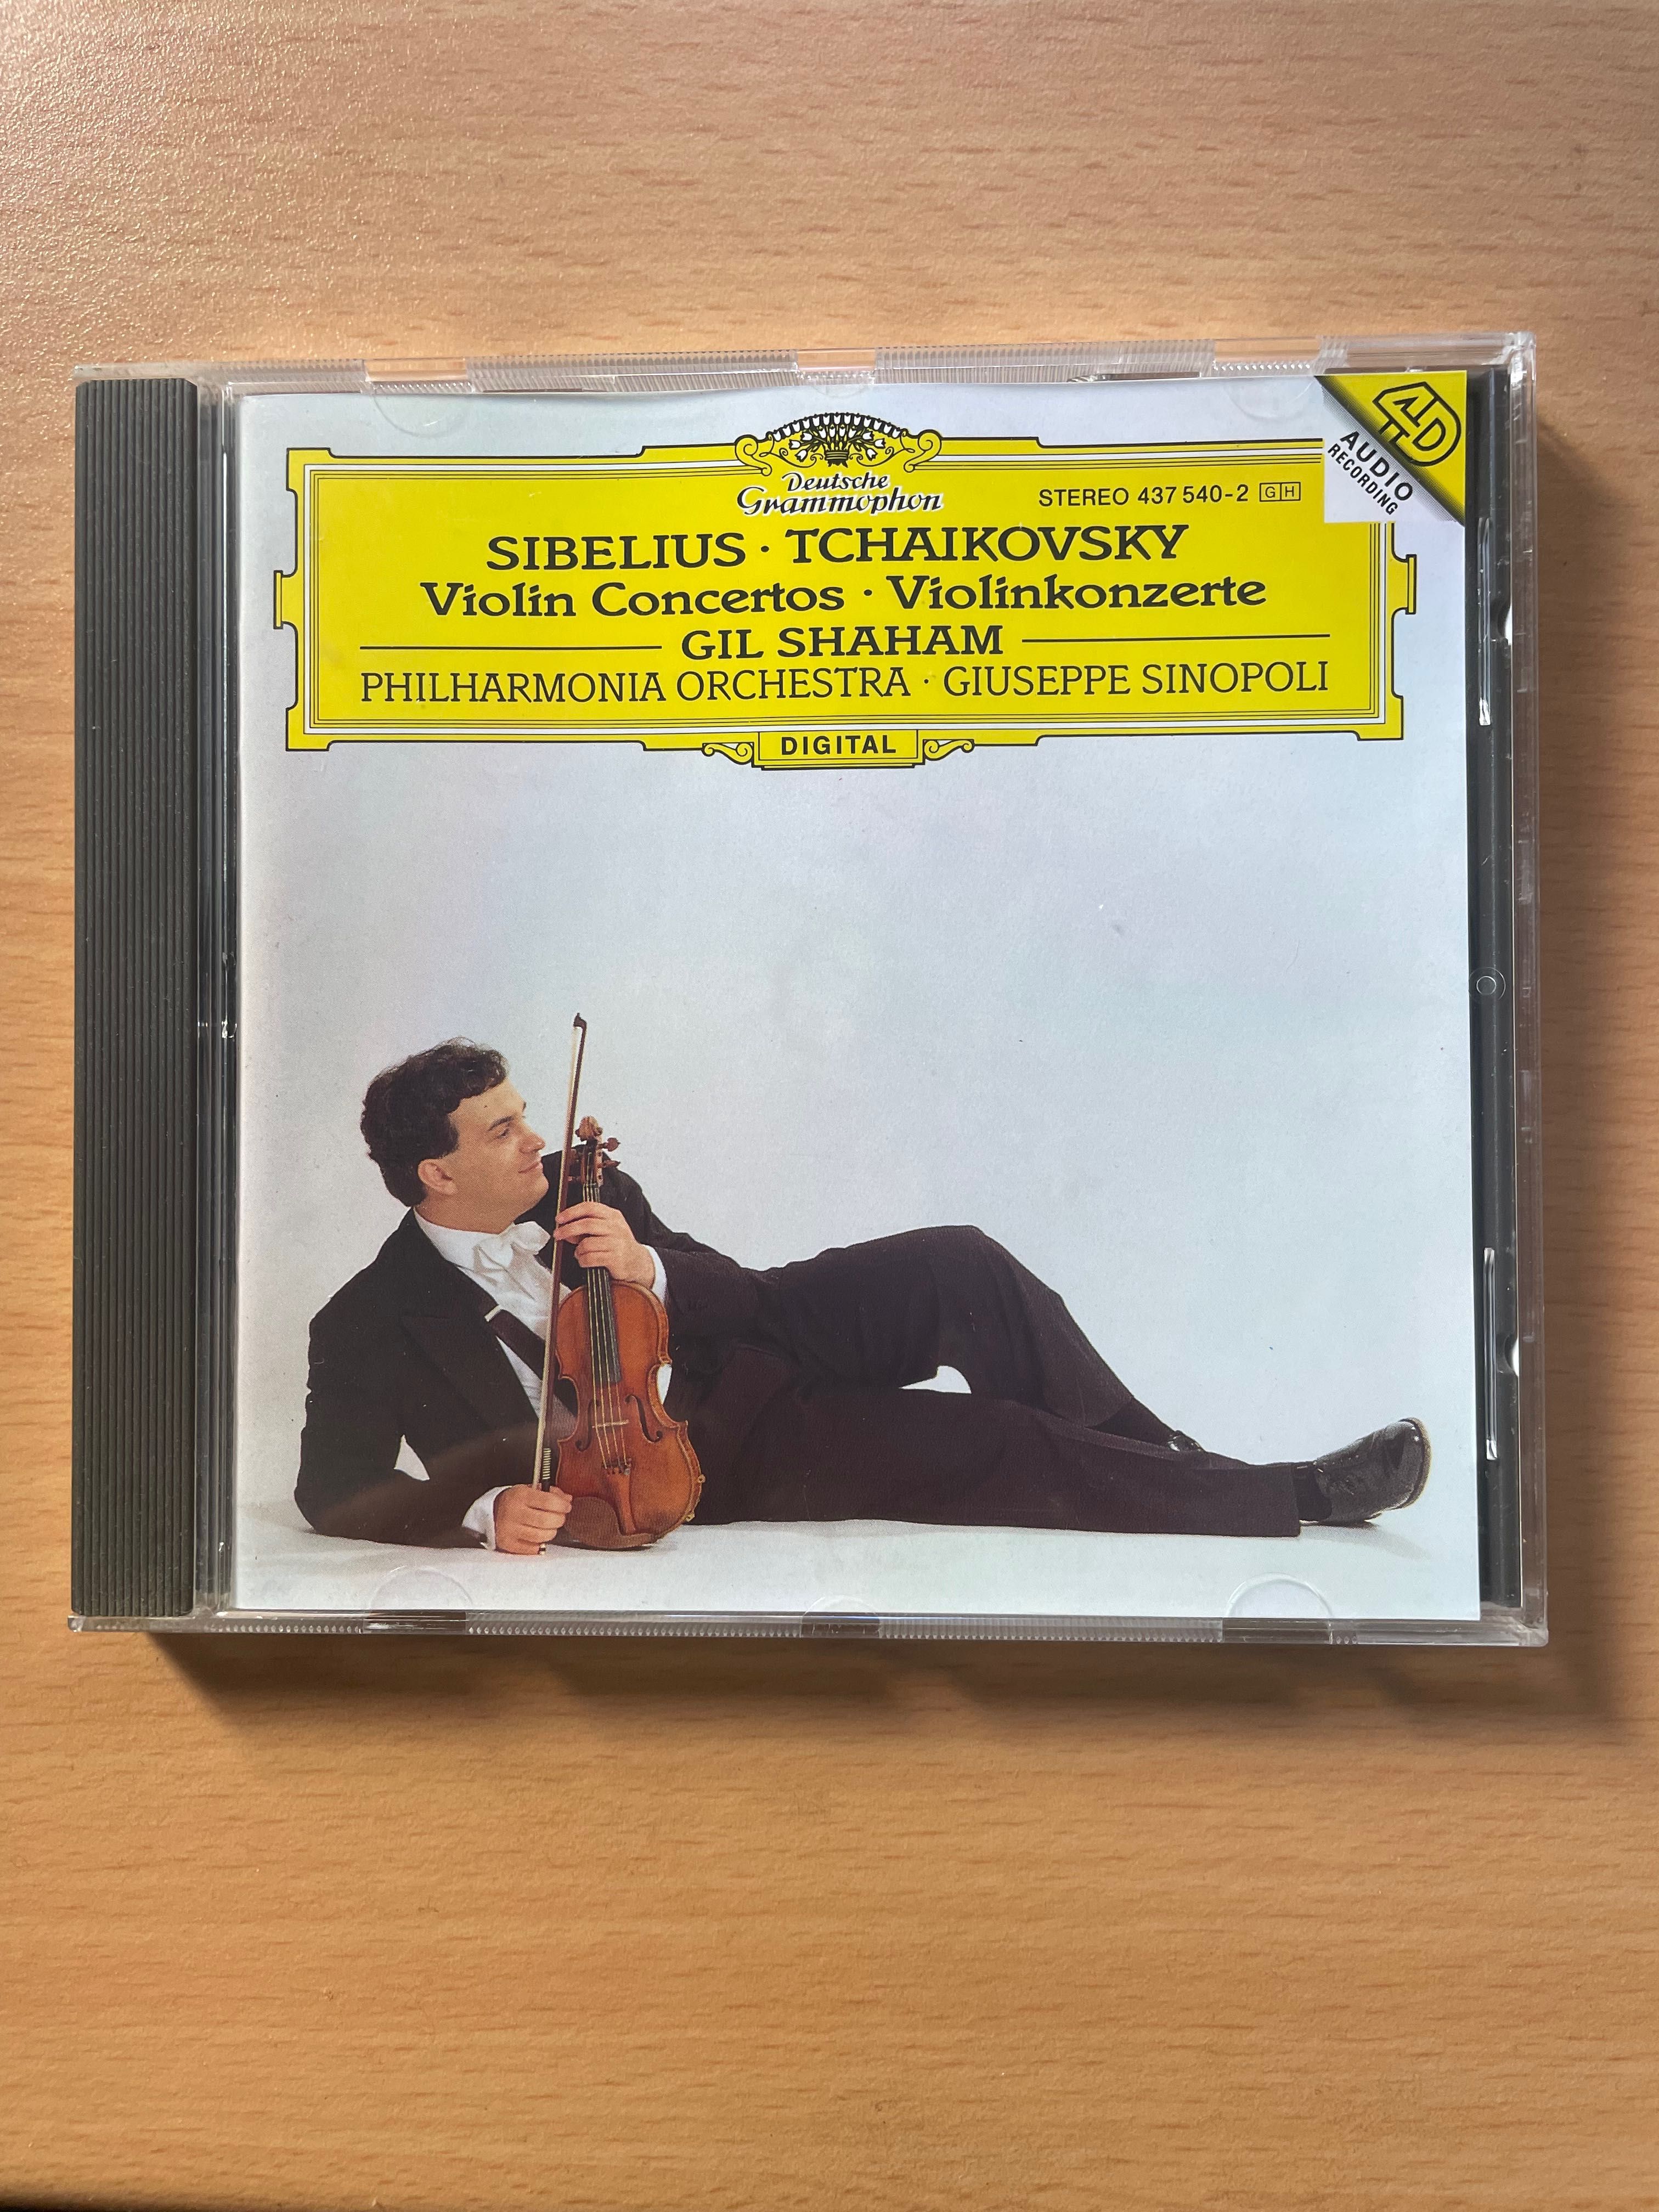 CD Sibelius*, Tchaikovsky*, Gil Shaham, Violon Concerto